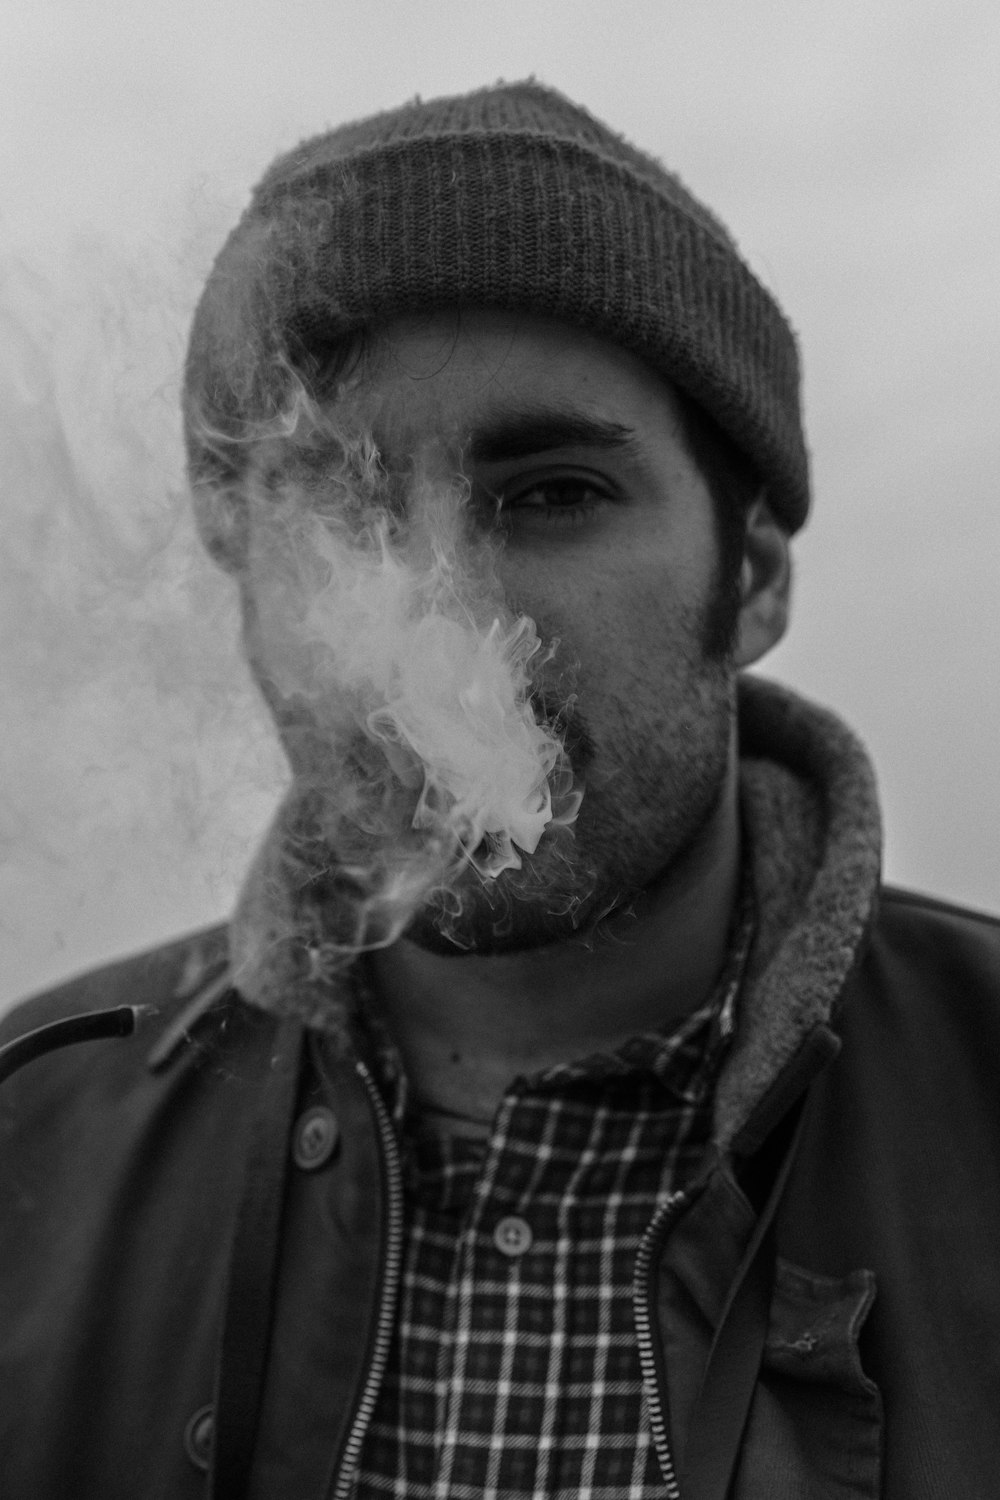 grayscale photo of a man smoking